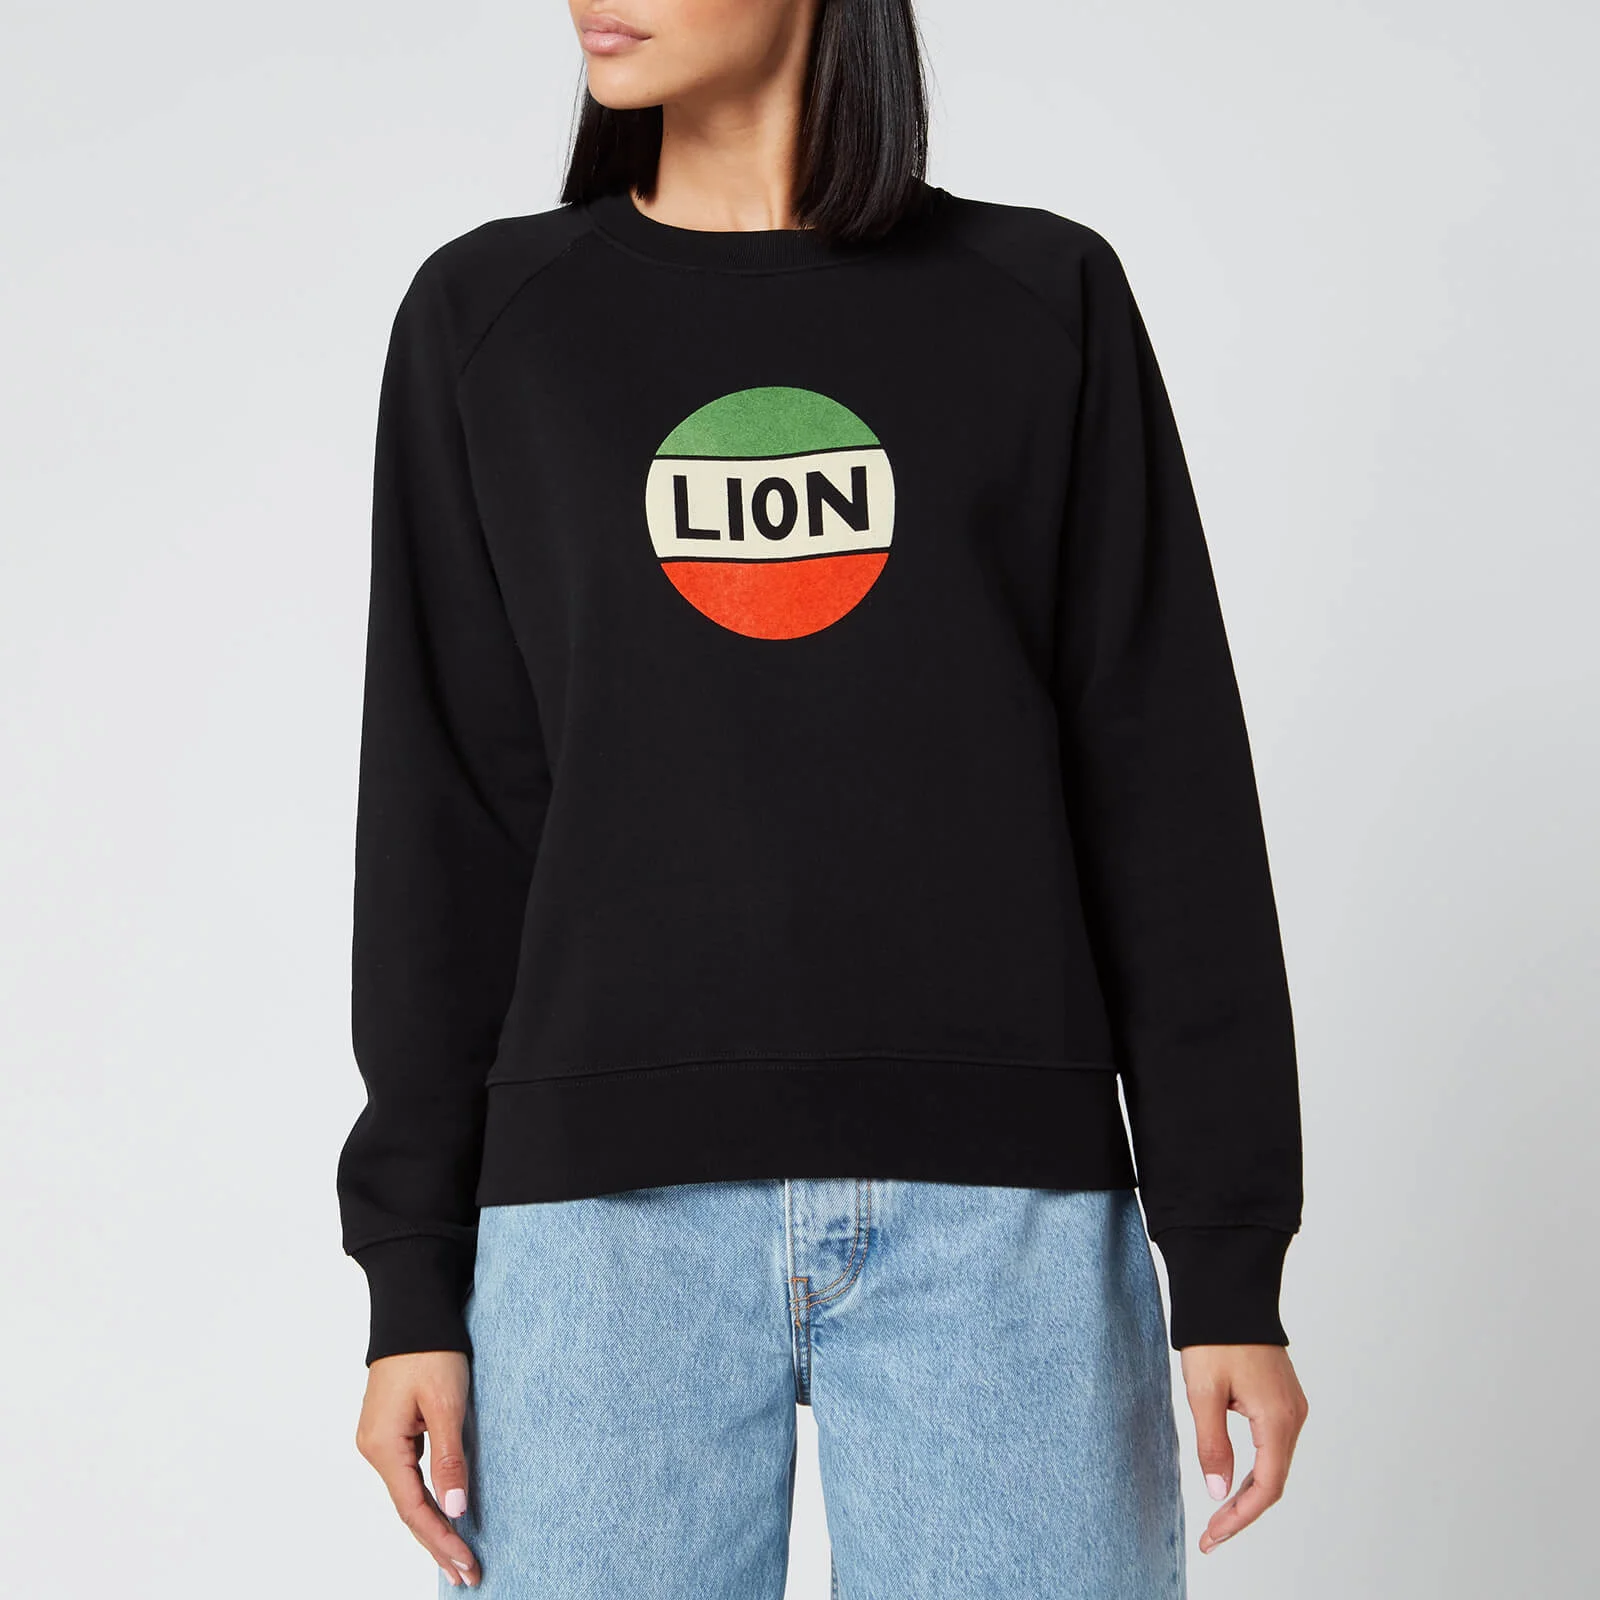 Bella Freud Women's Lion Badge Flock Sweatshirt - Black/Multi Image 1